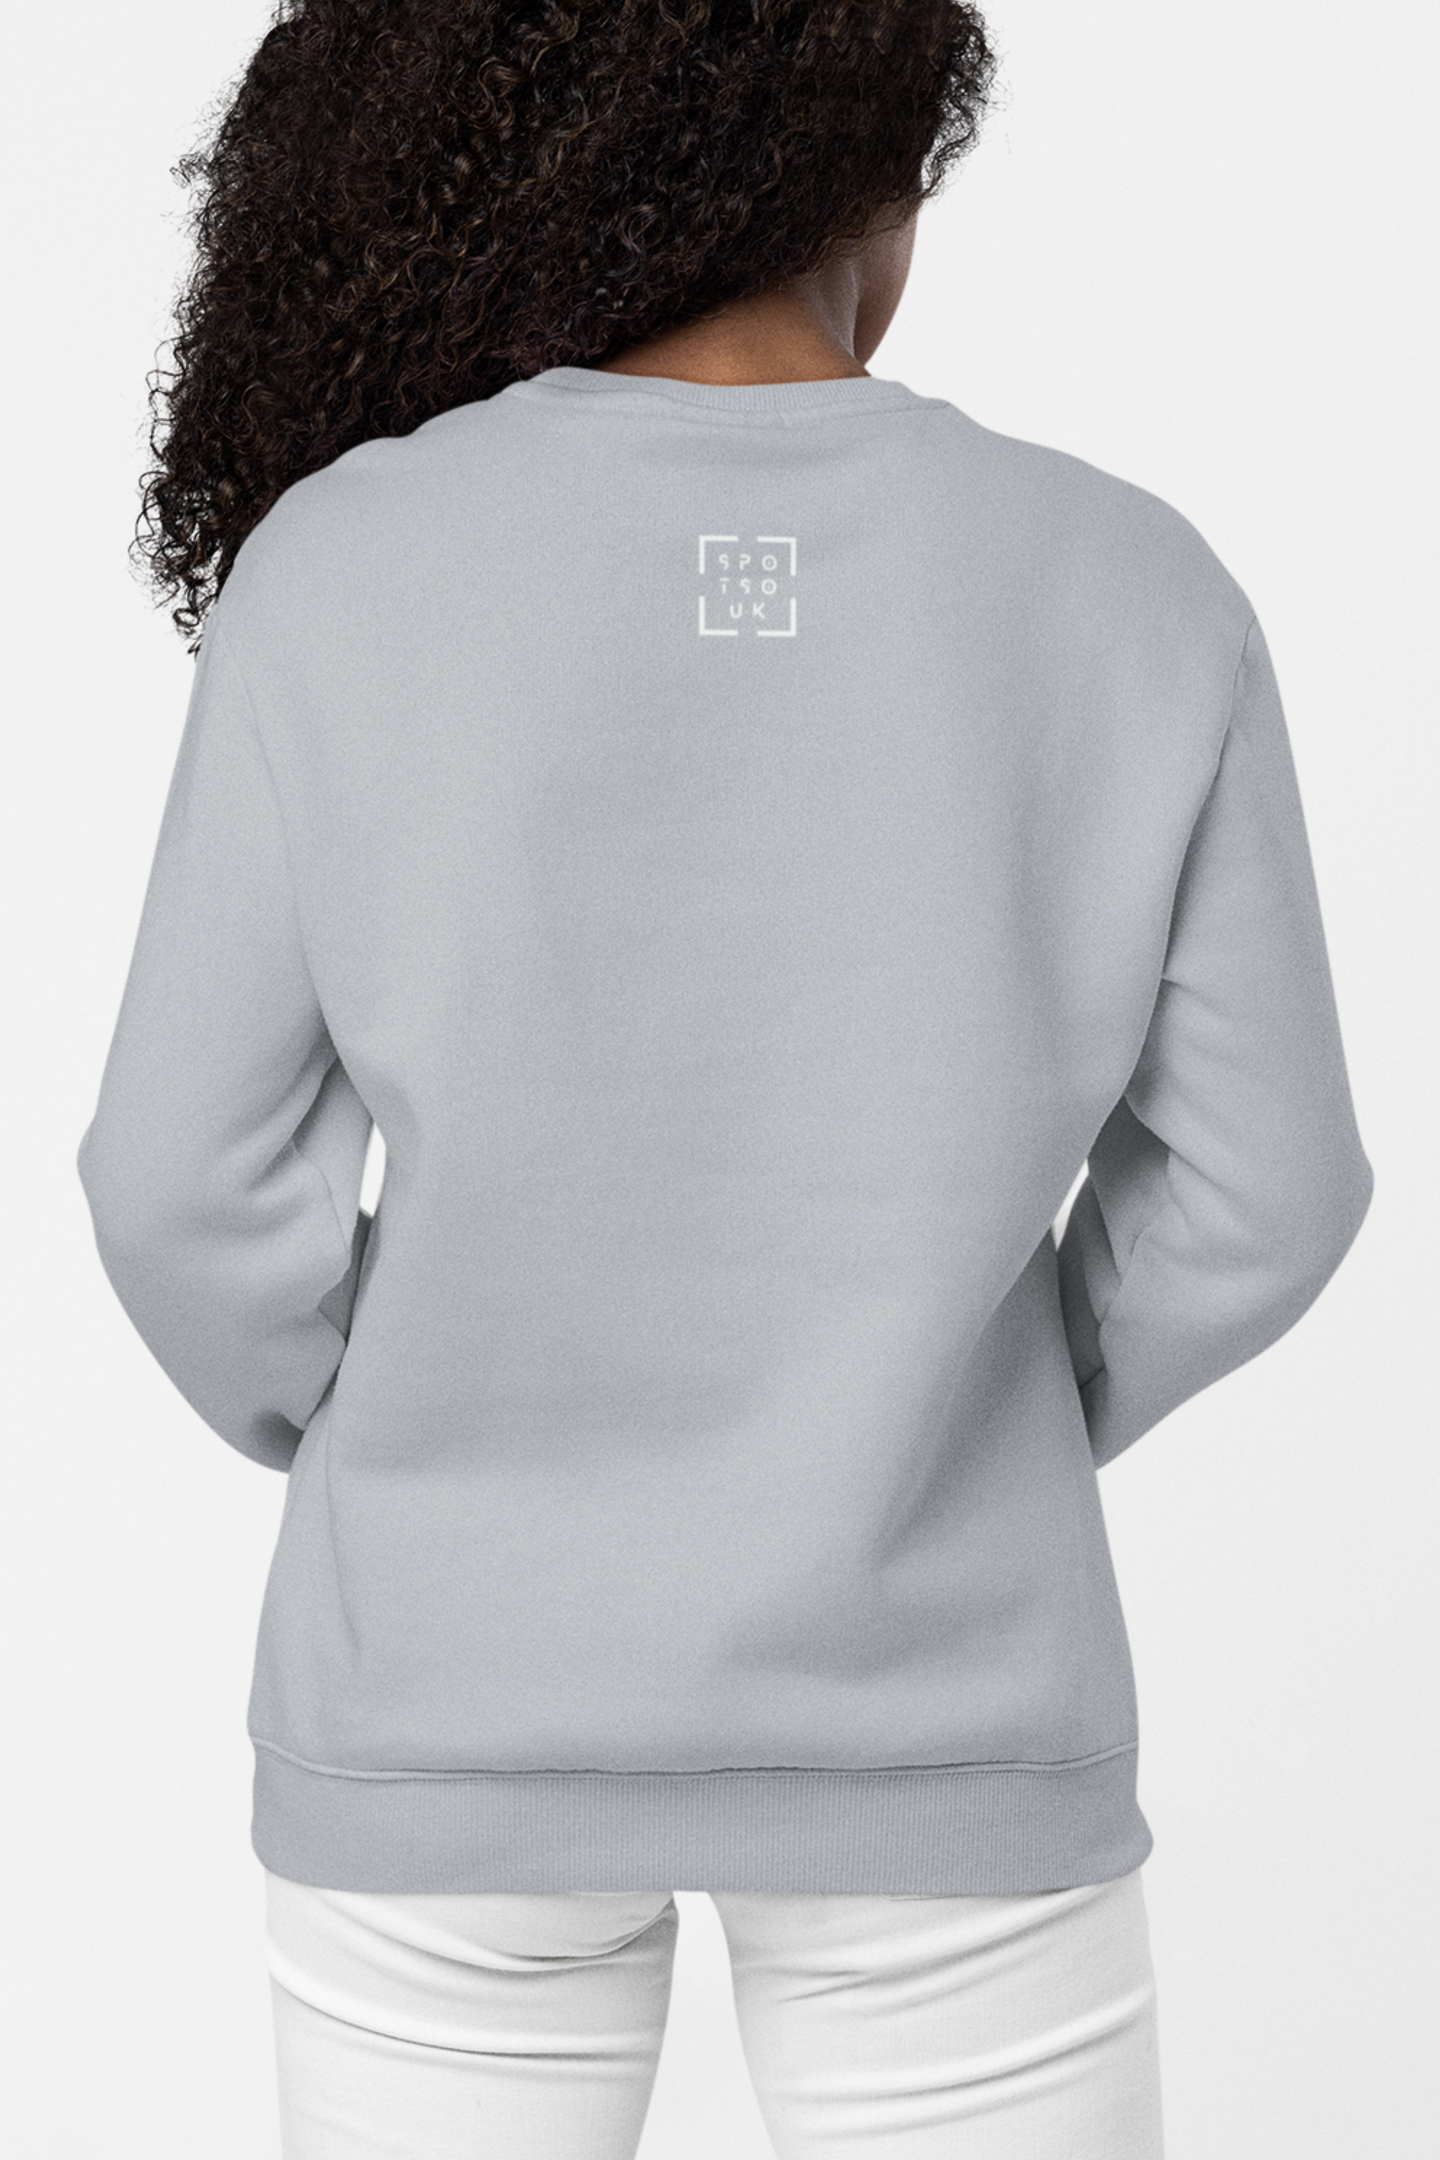 Women's Graphic Crew Neck Sweatshirts